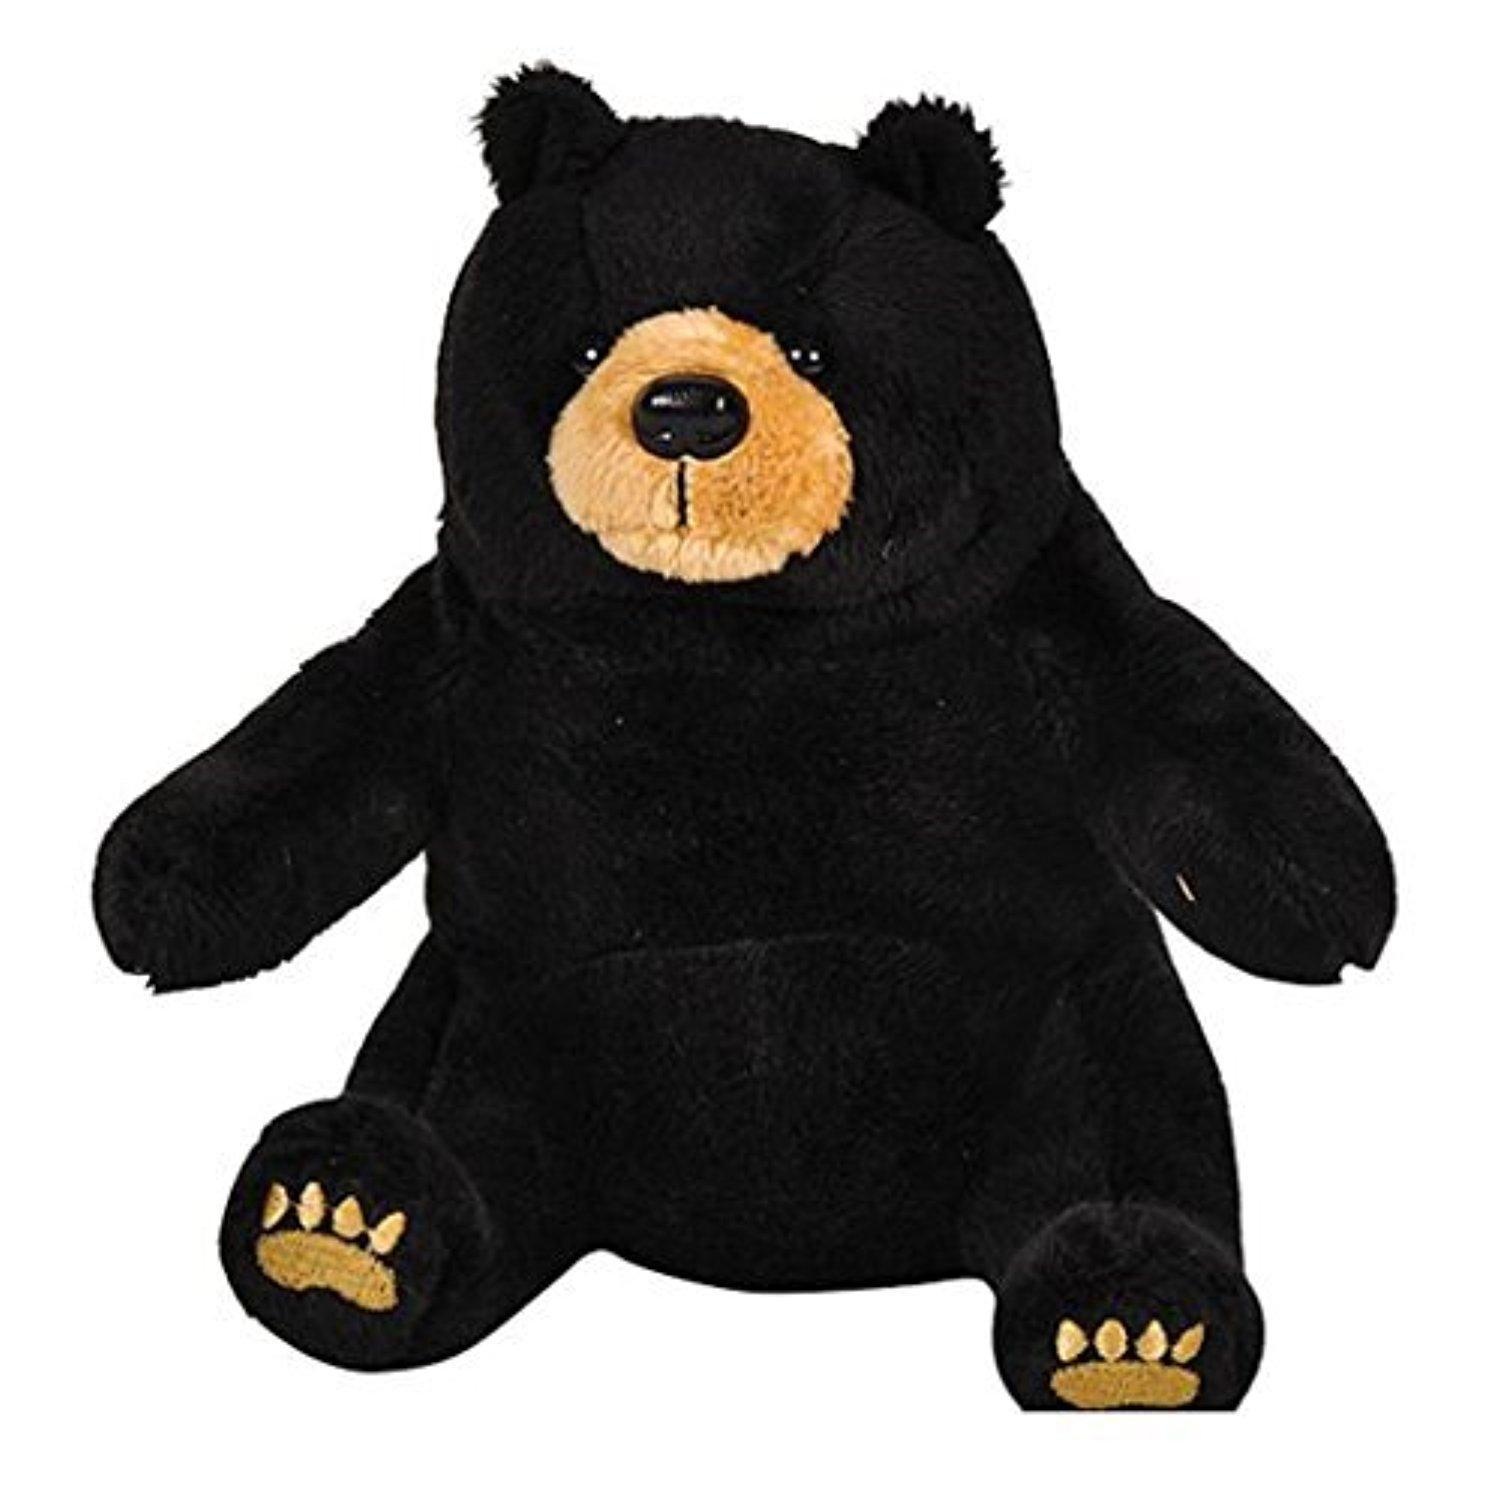 One Realistic Plush Stuffed Animal Black Bear Teddy Bear by Pounce ...